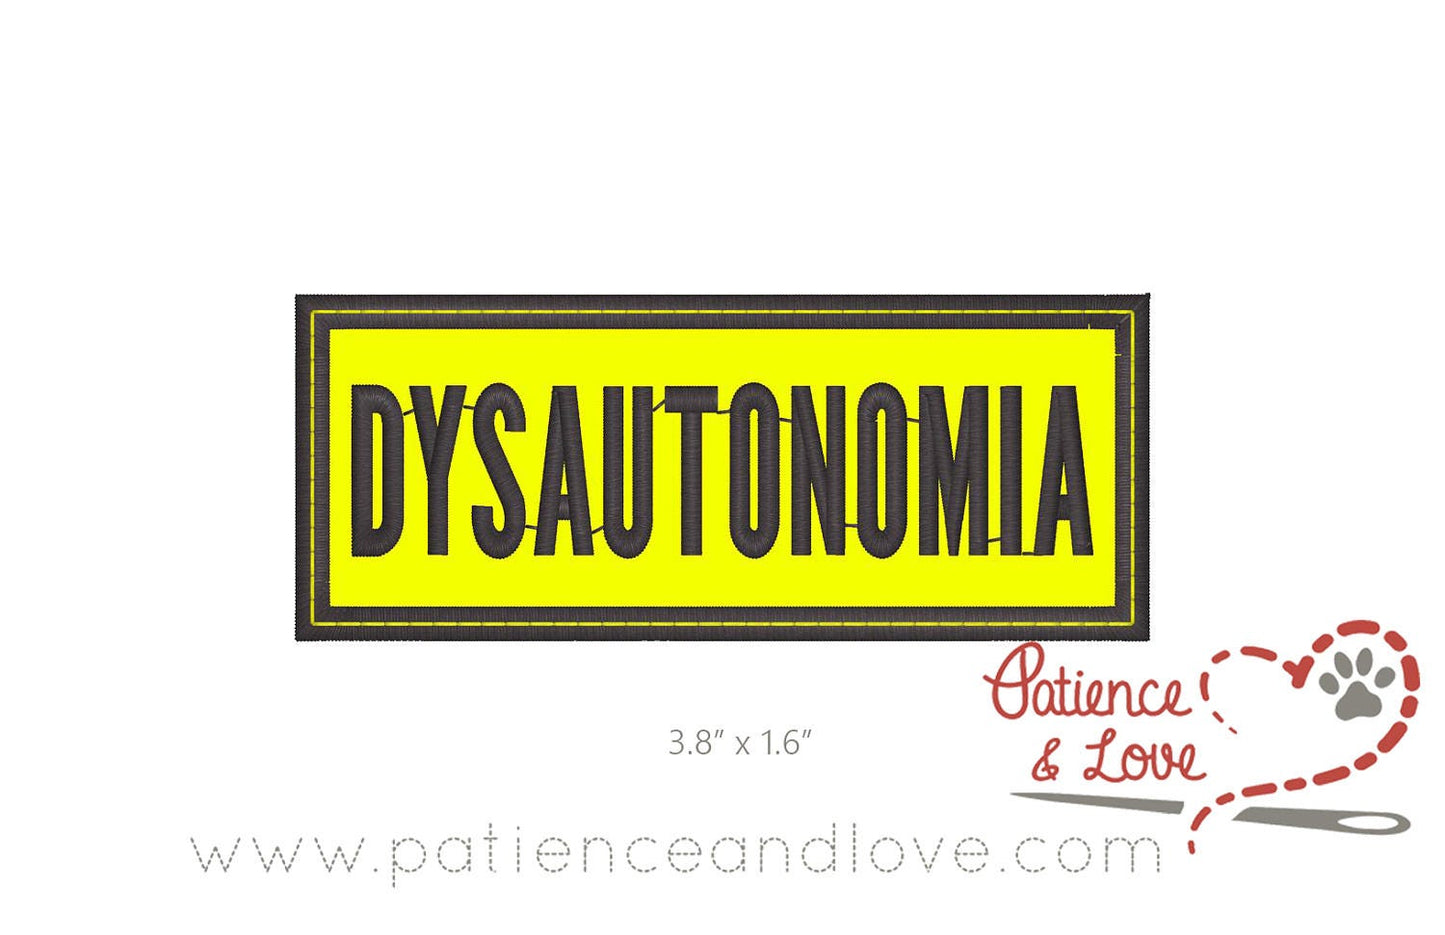 Dysautonomia, 3.8 x 1.6 inch rectangular patch